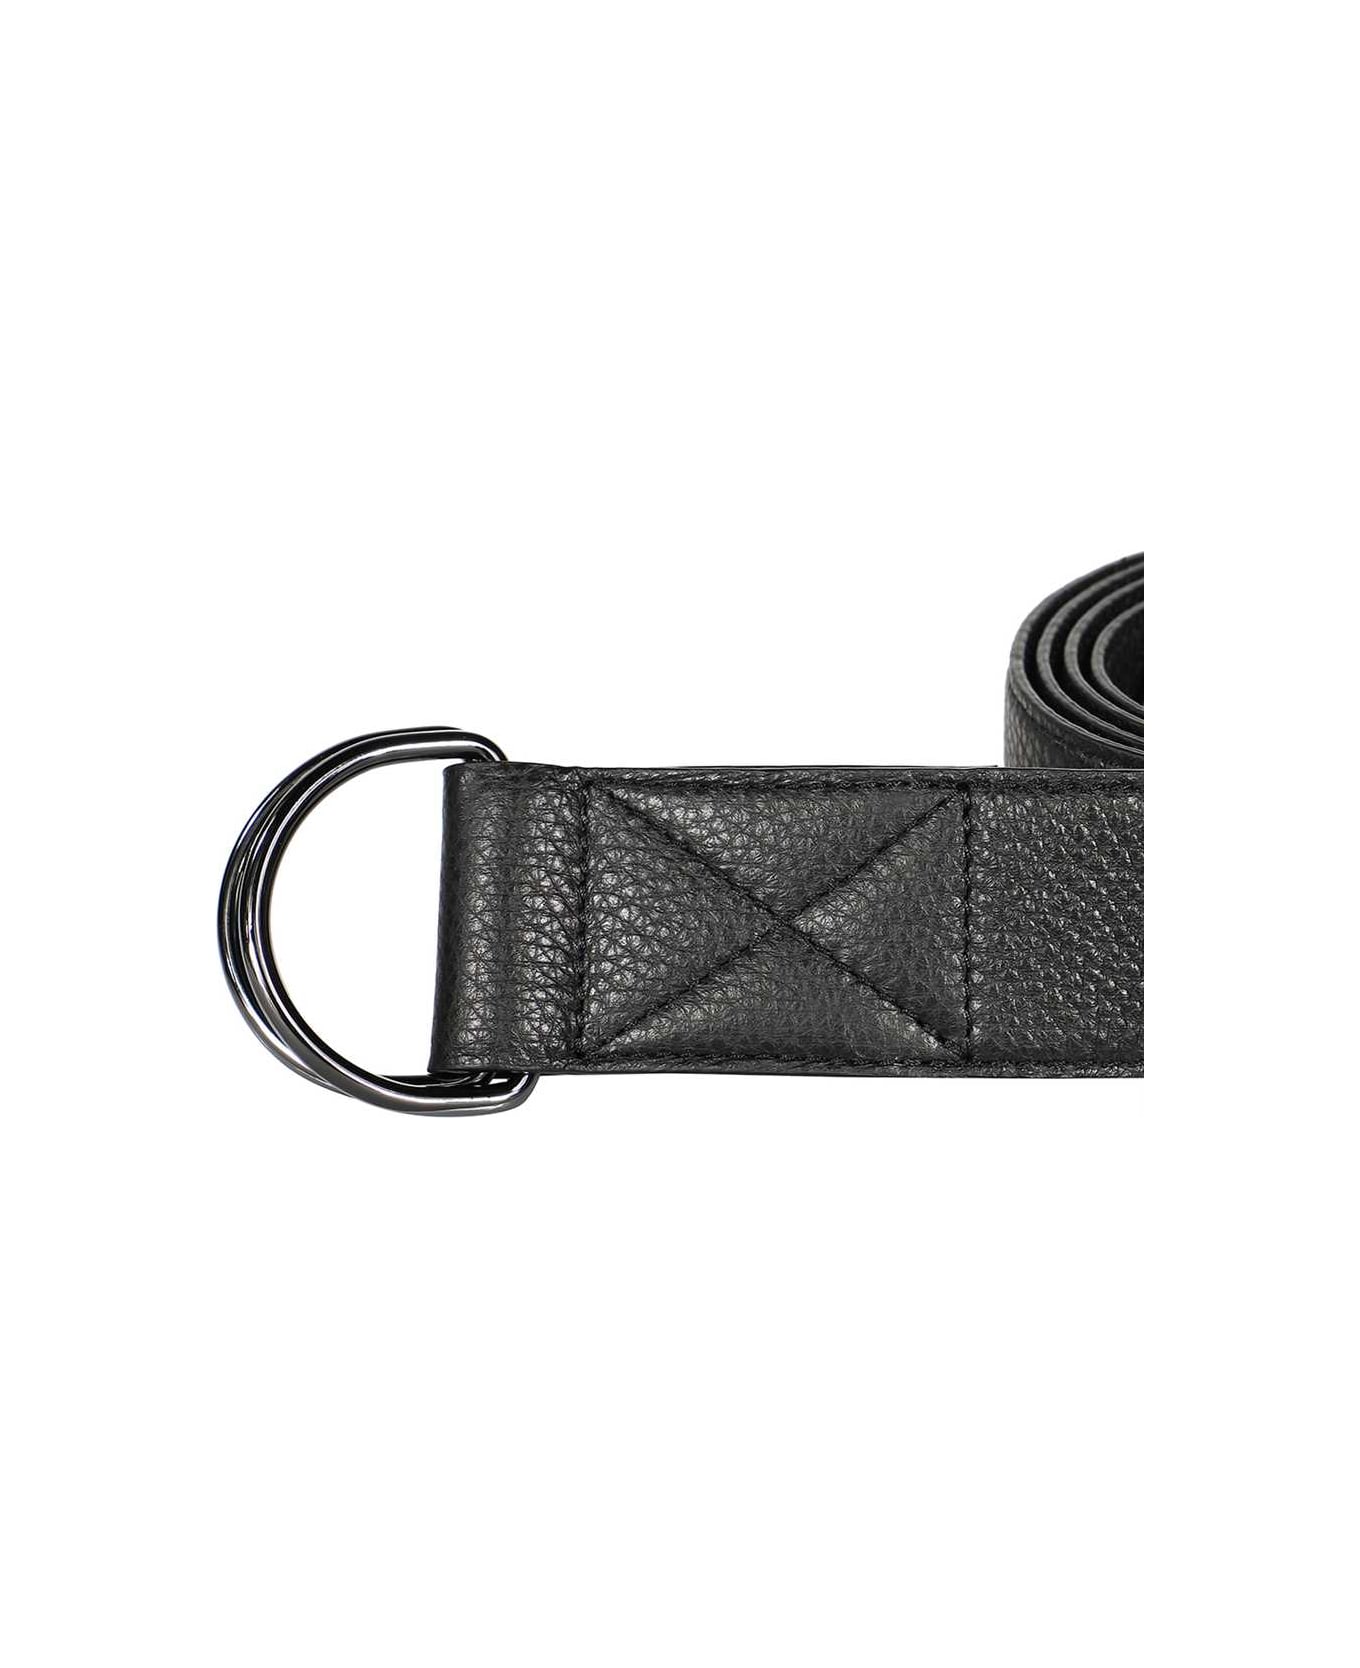 Max Mara Norma Leather Belt - black